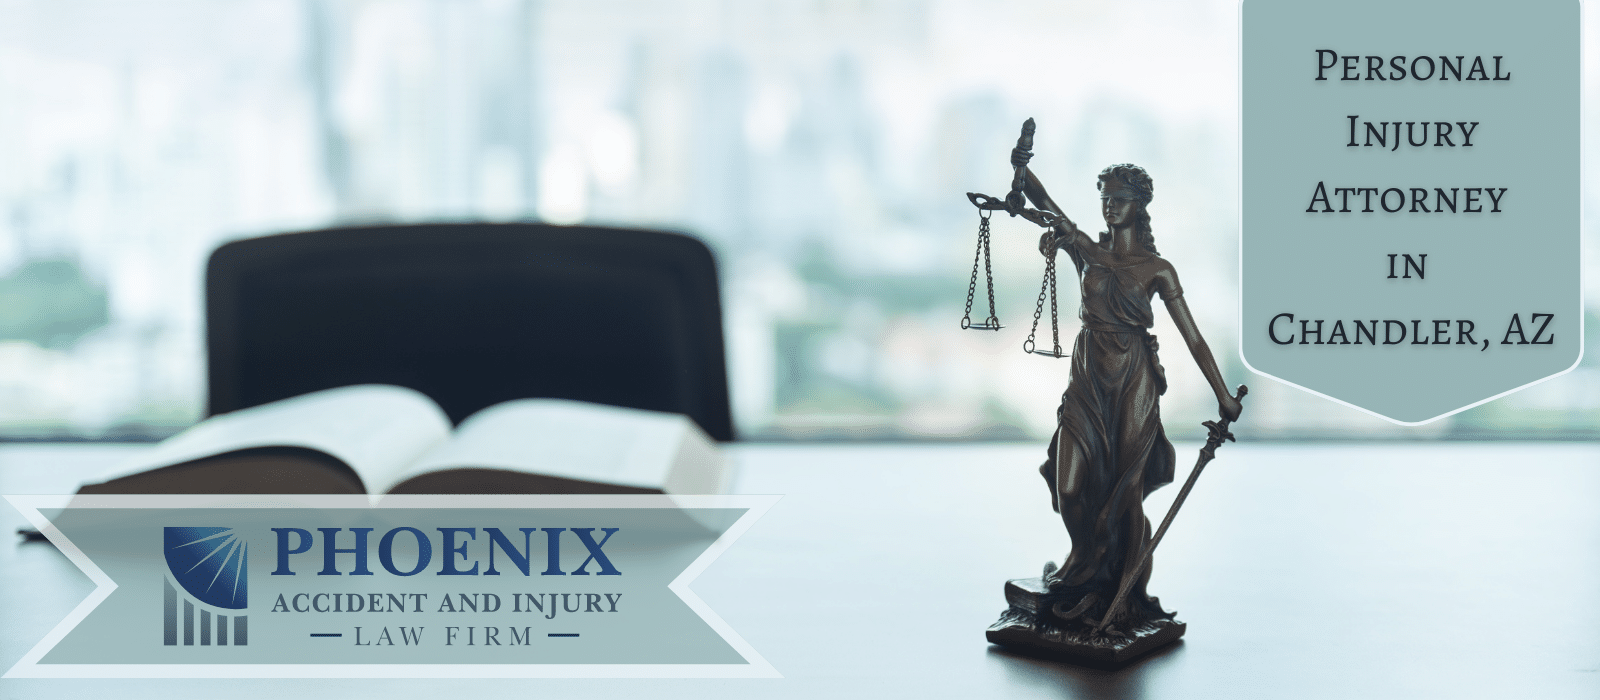 Phoenix Law Personal Injury Attorney in Chandler, AZ